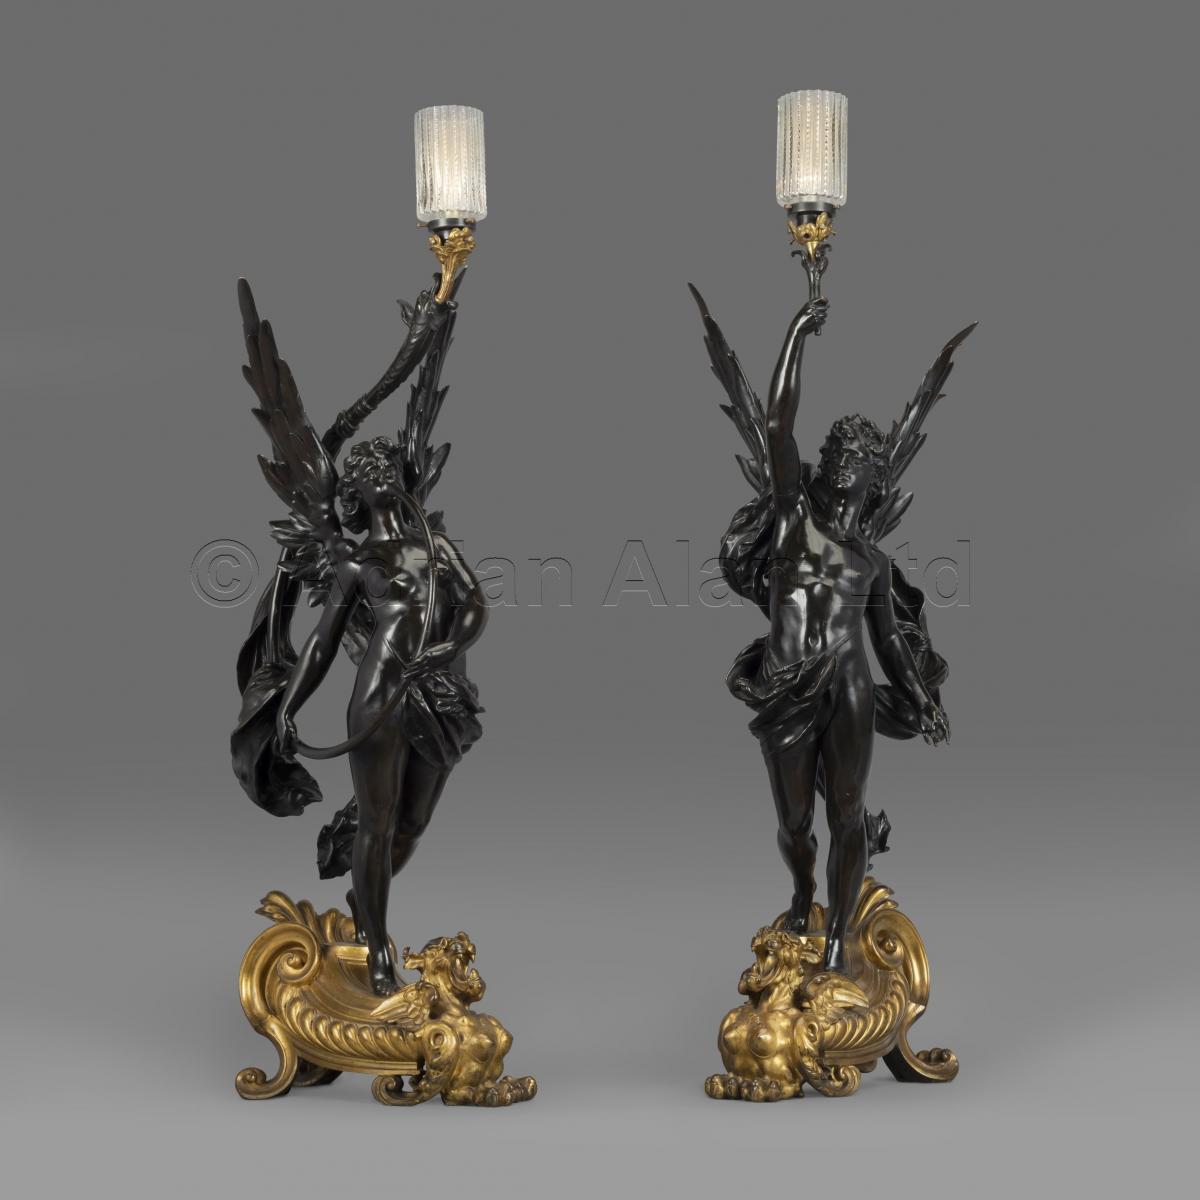 Pair of Bronze Figural Torcheres, By Bouchon, Paris ©AdrianAlanLtd 2